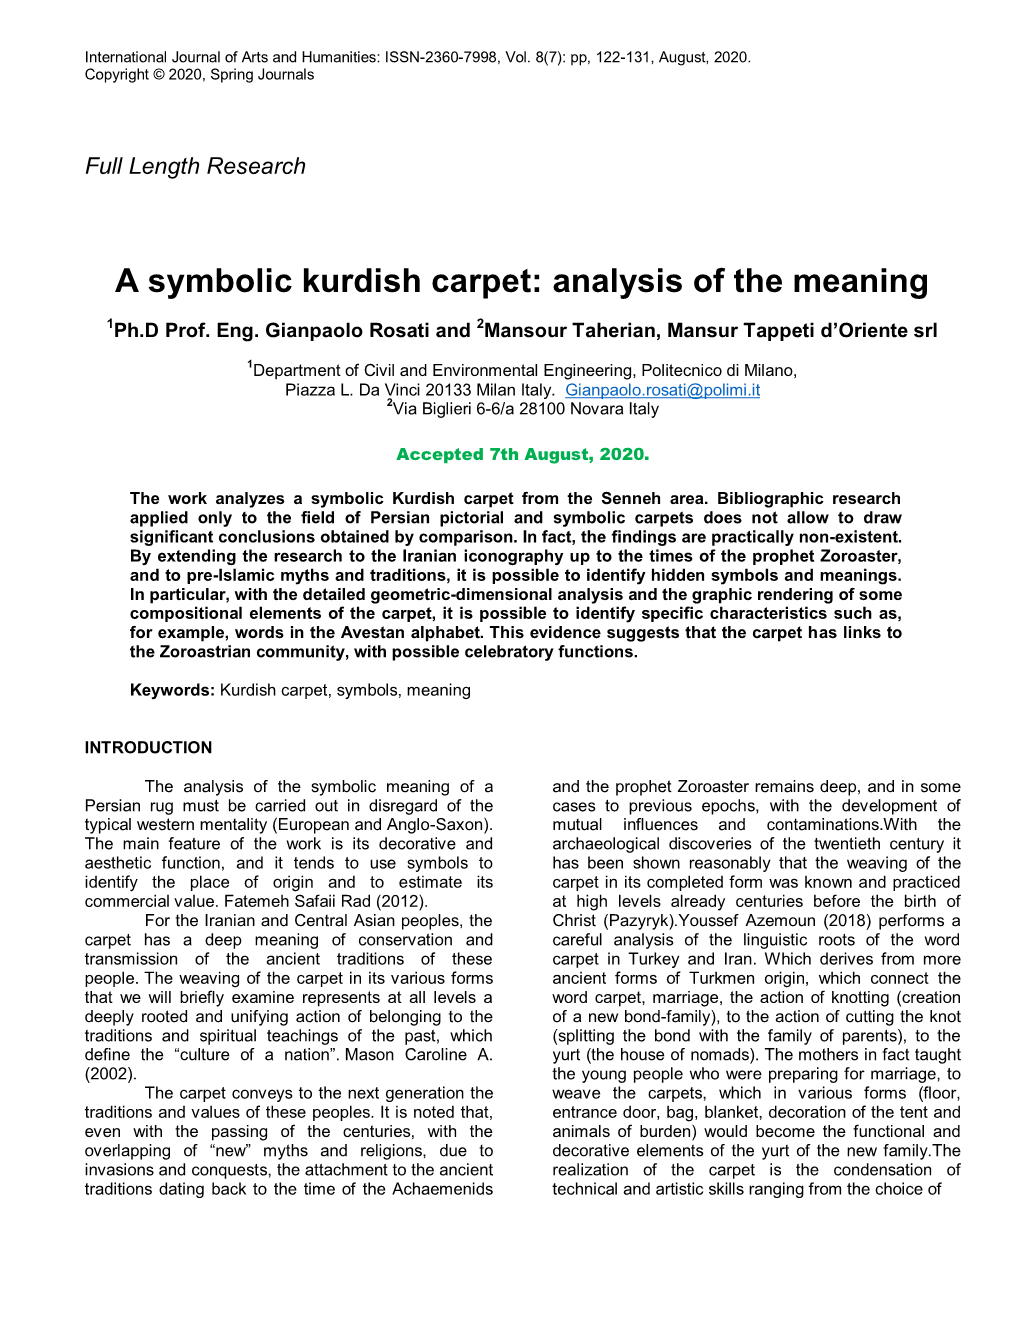 A Symbolic Kurdish Carpet: Analysis of the Meaning